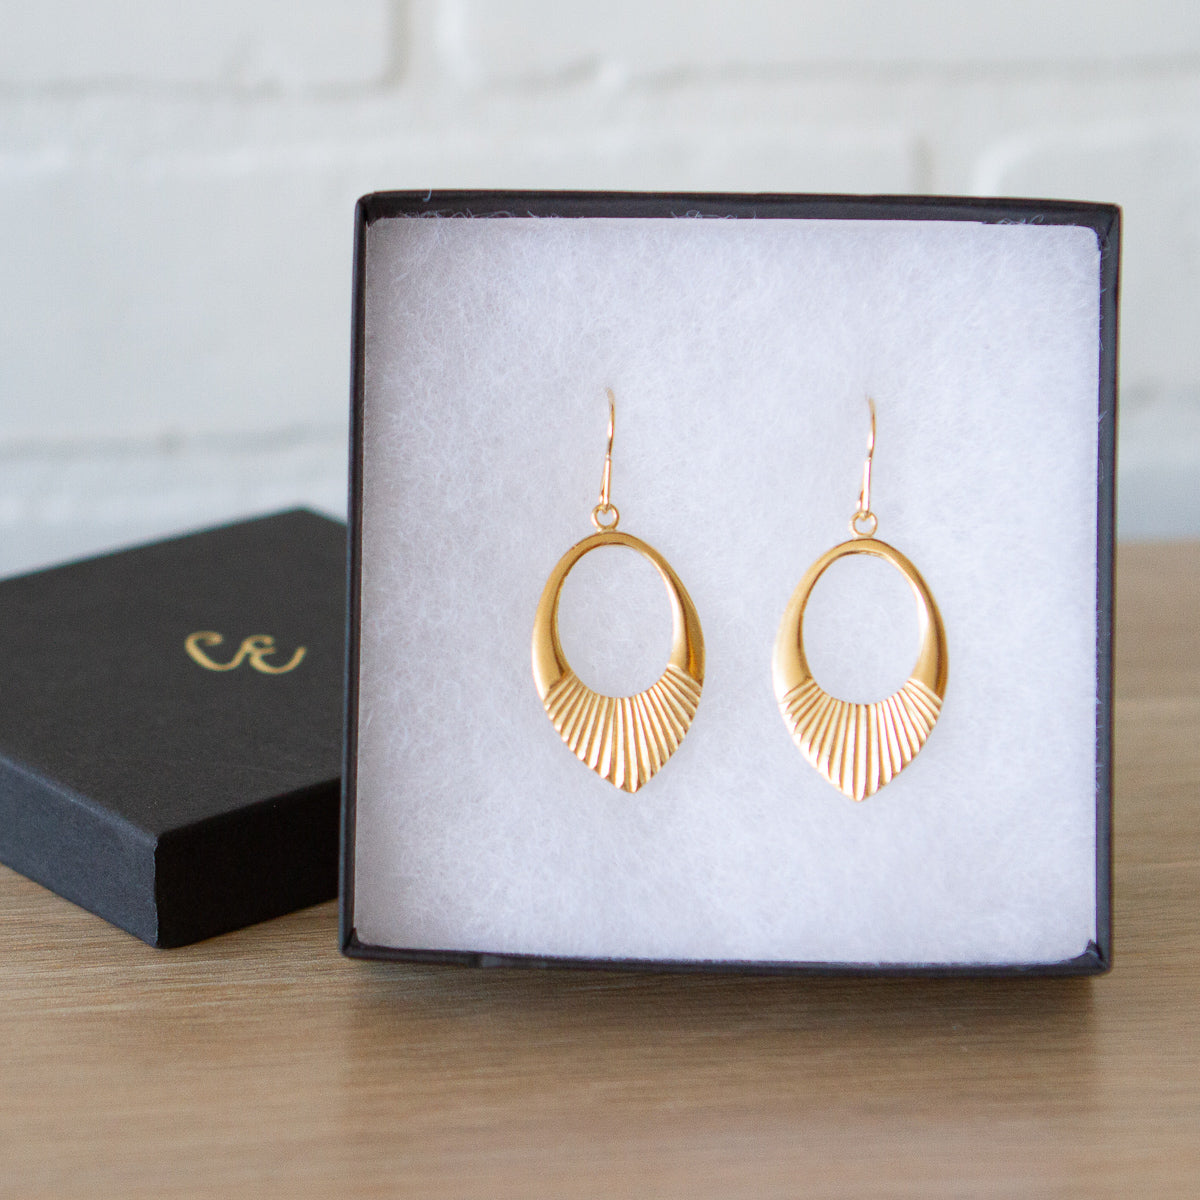 Gold vermeil medium open petal shape earrings with textured bottoms in a gift box